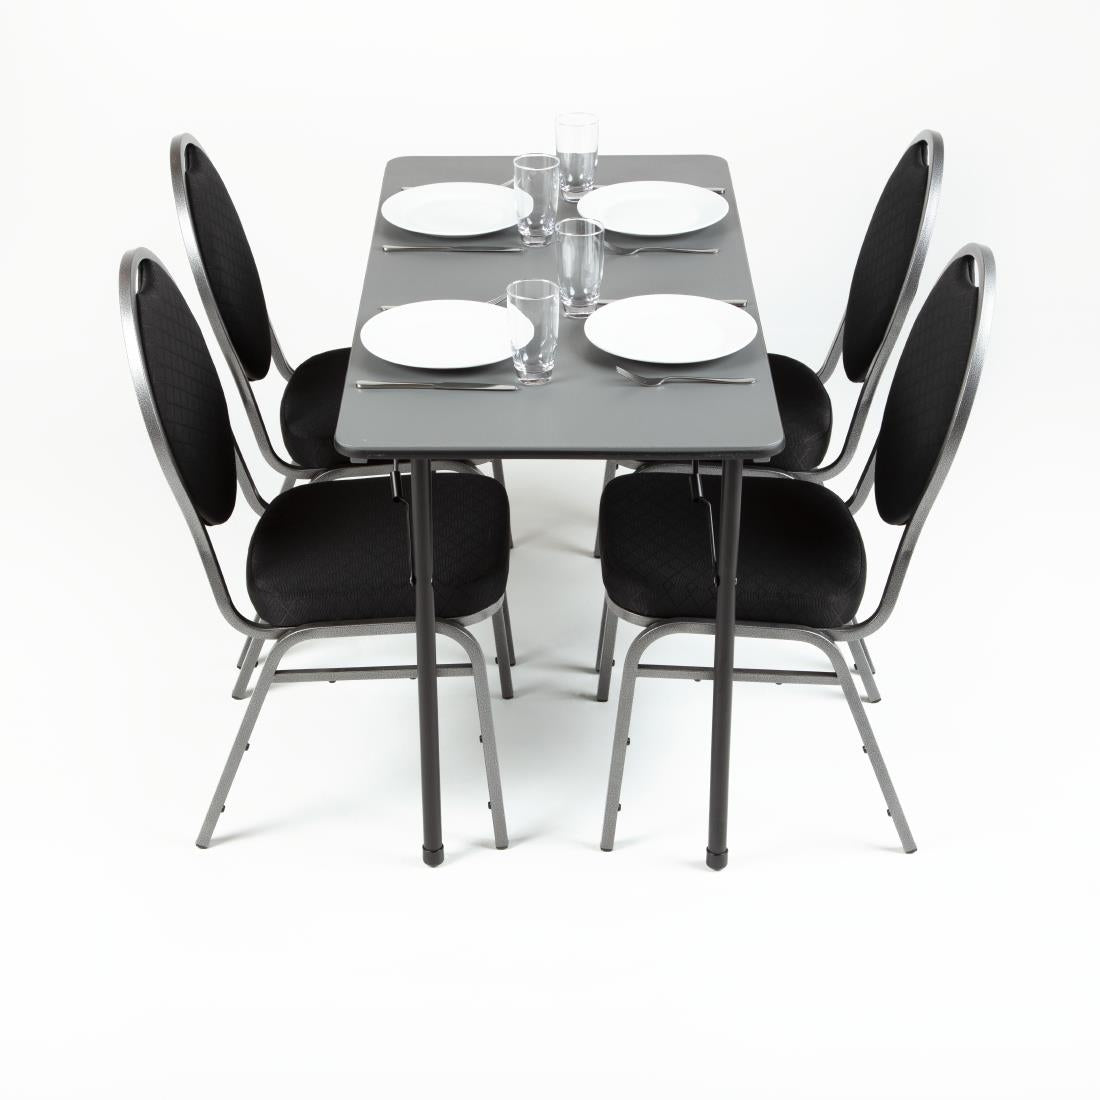 GC594 Bolero ABS Rectangular Folding Table Grey (Single) JD Catering Equipment Solutions Ltd